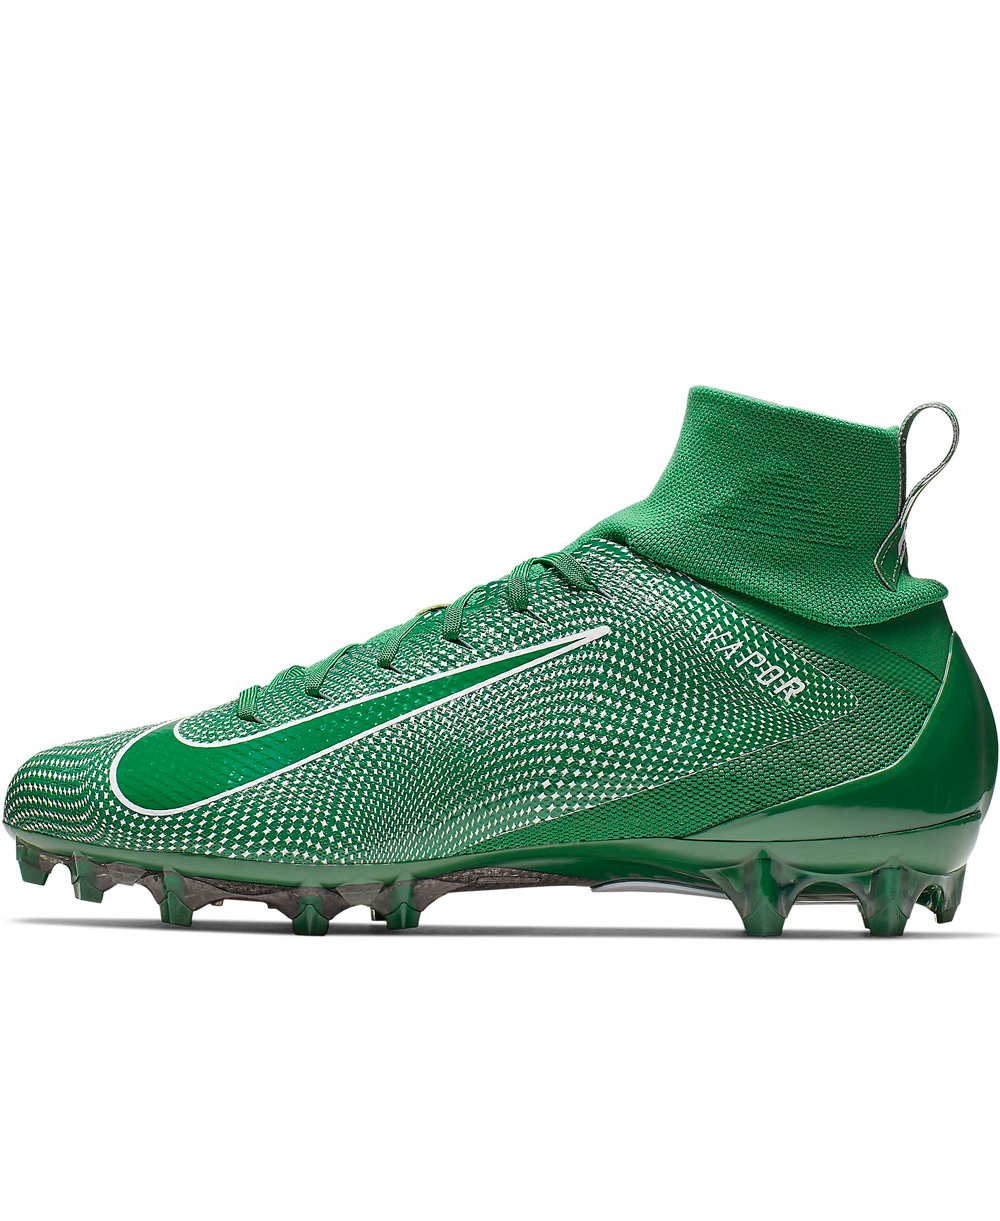 Nike Men's Vapor Untouchable 3 Pro American Football Cleats Pine Green